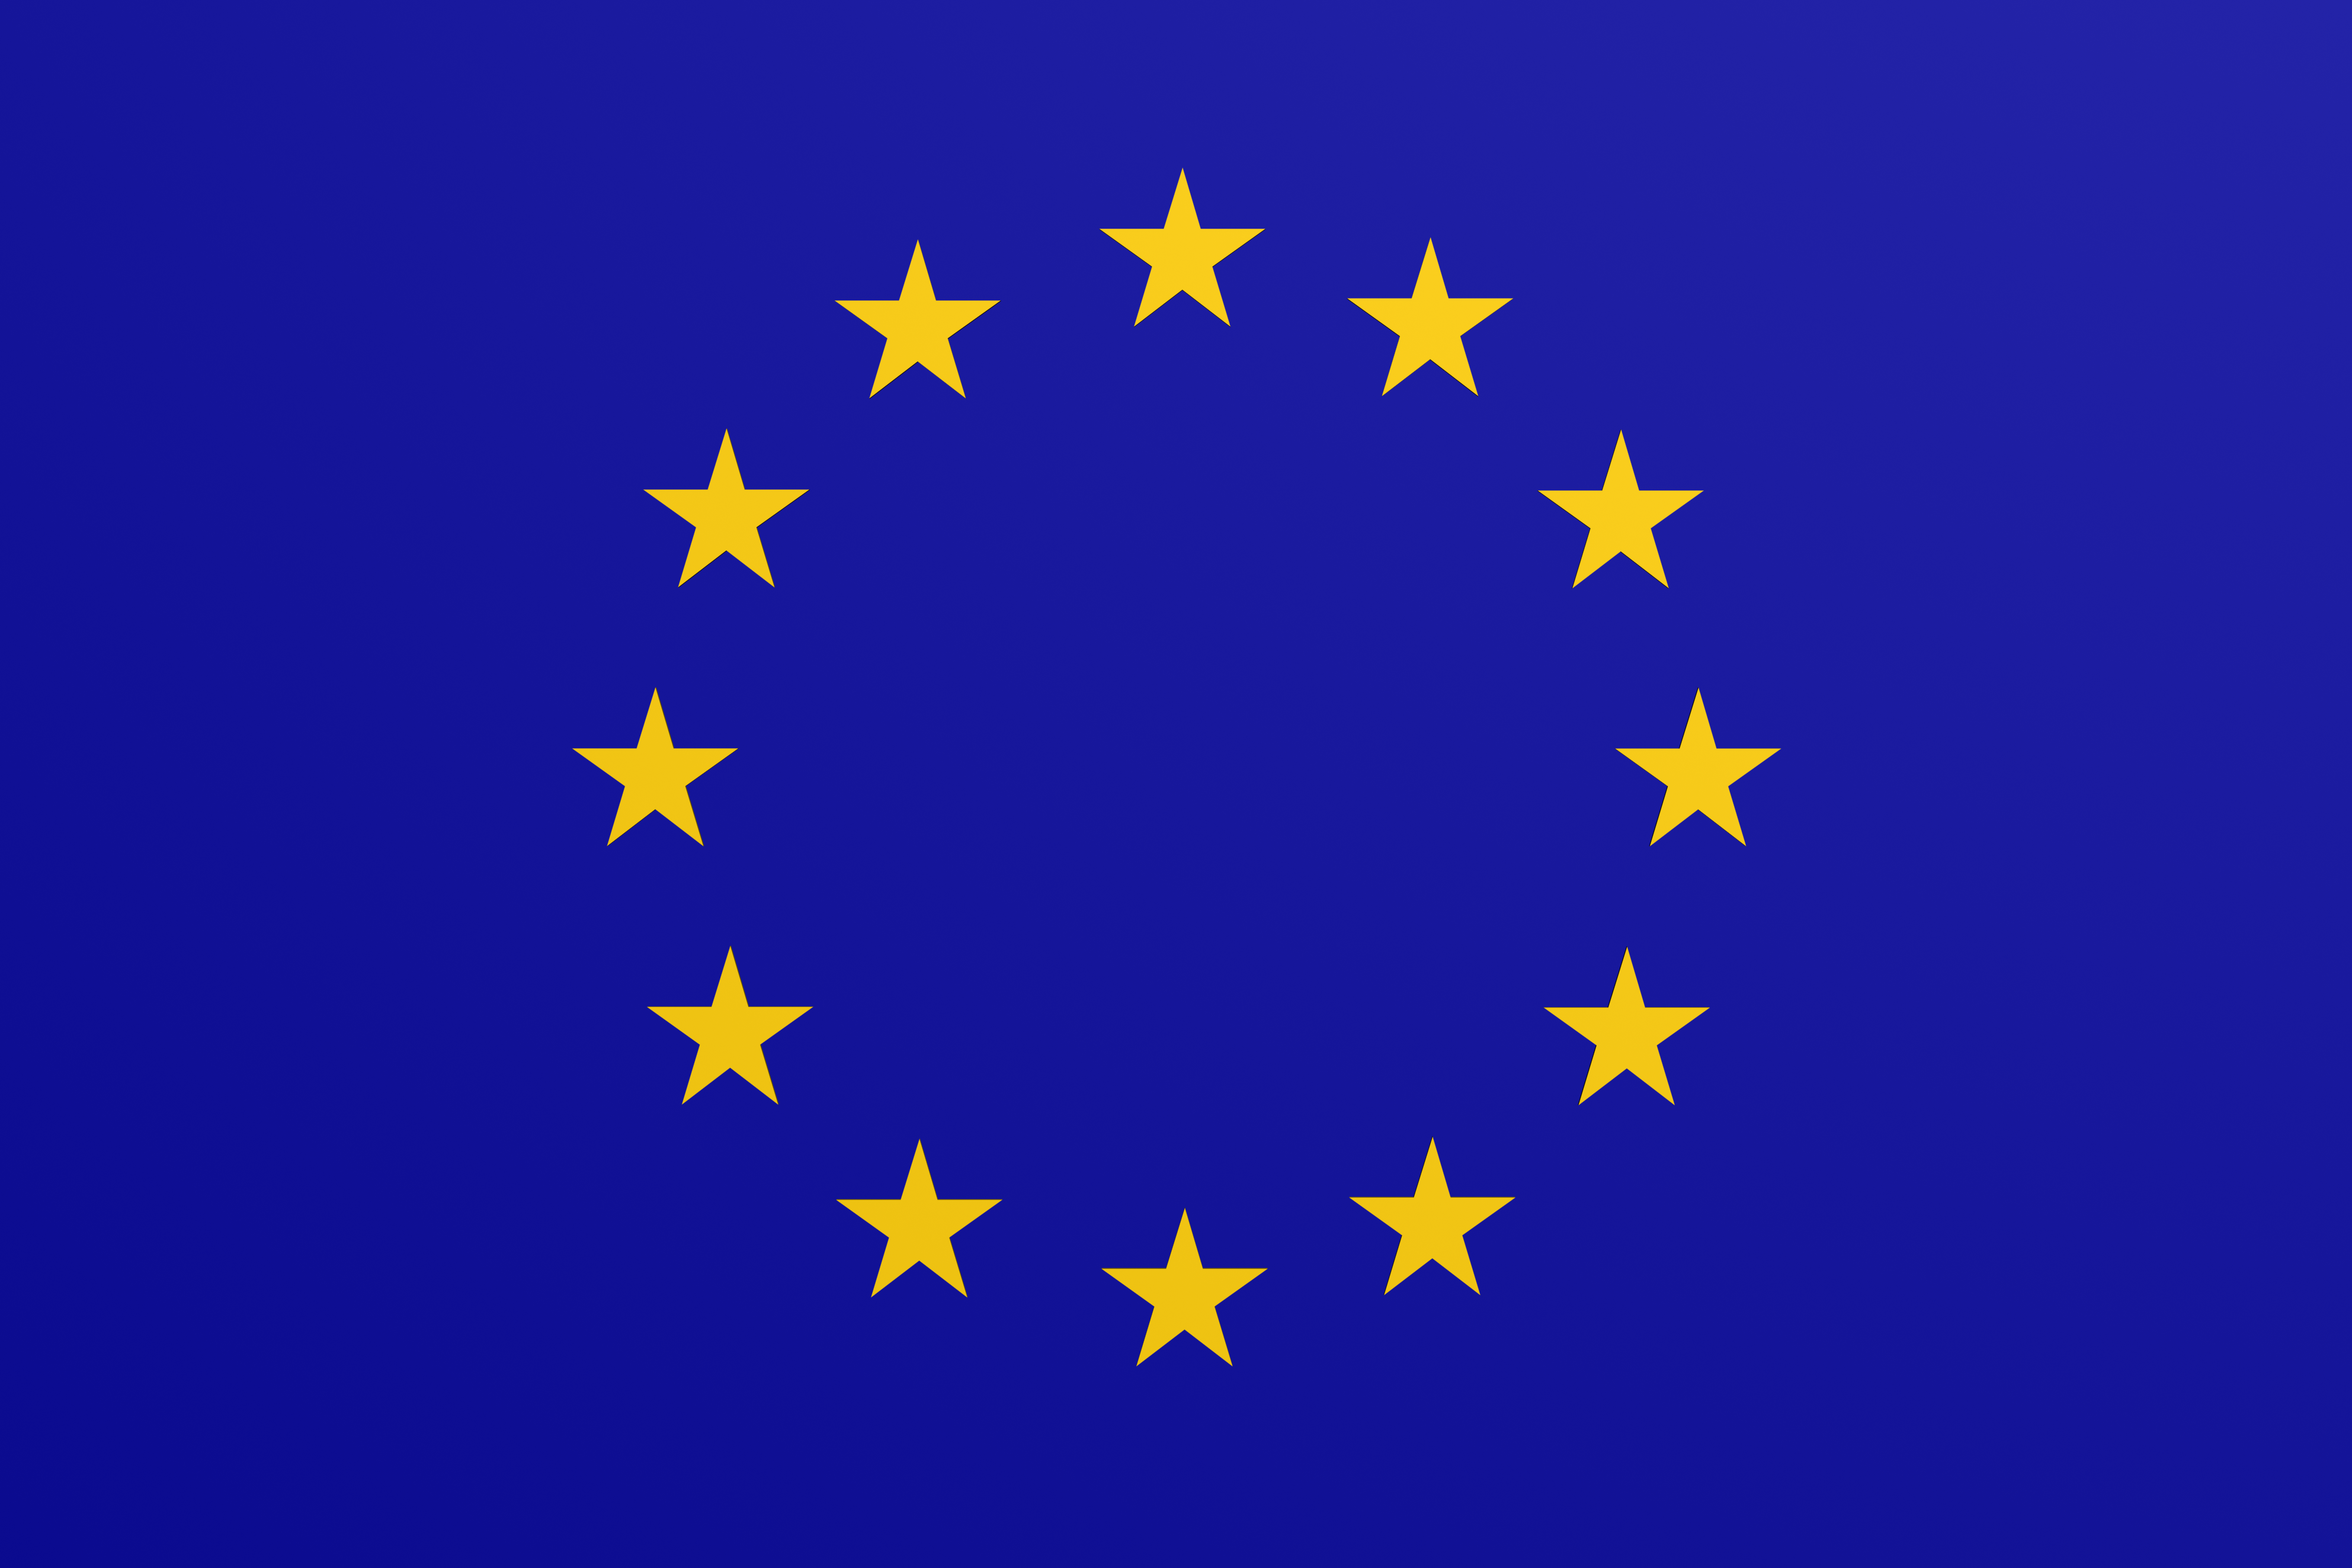 Euroesprit Eu Flag Site European Logo Pictures Wallpaper And